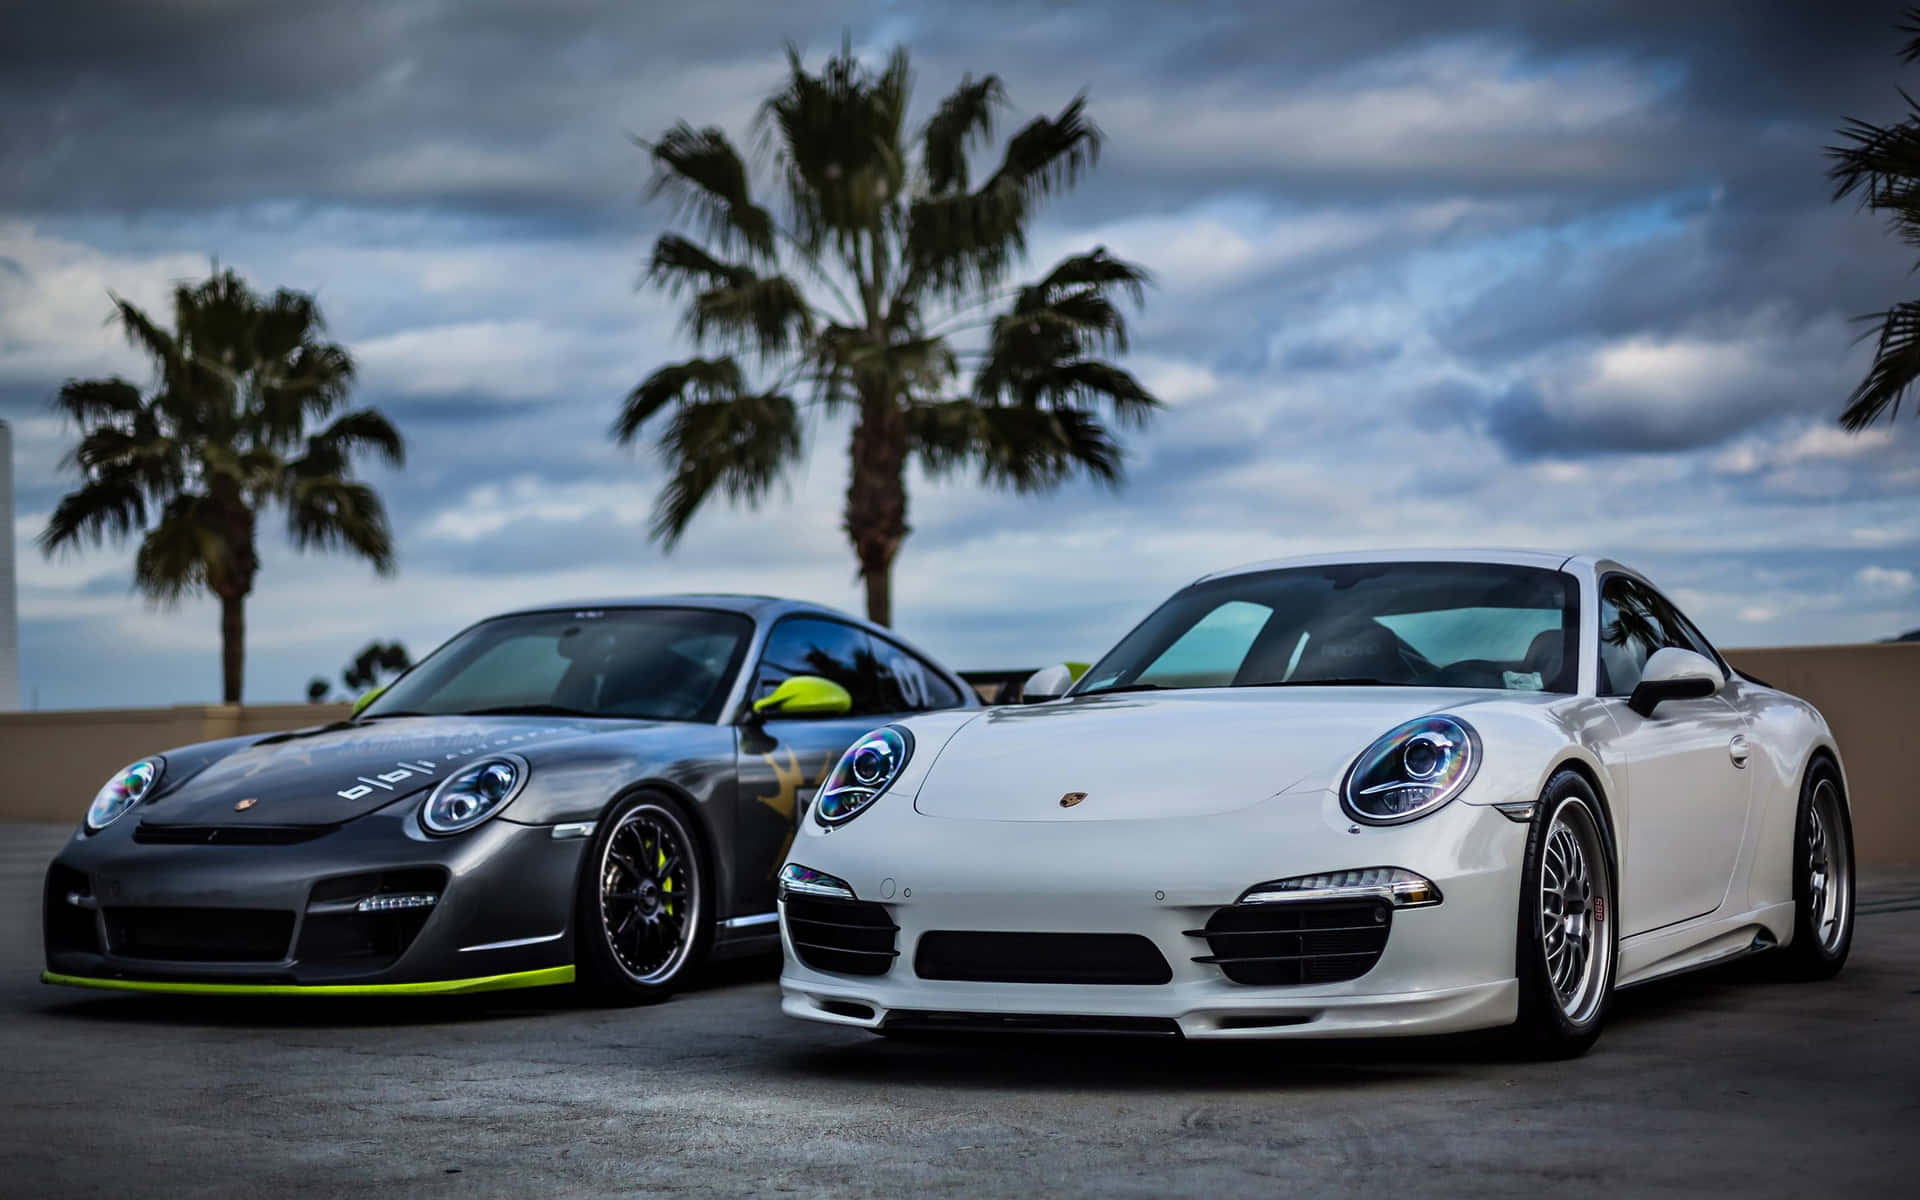 4k Ultra Hd Black And White Porsche